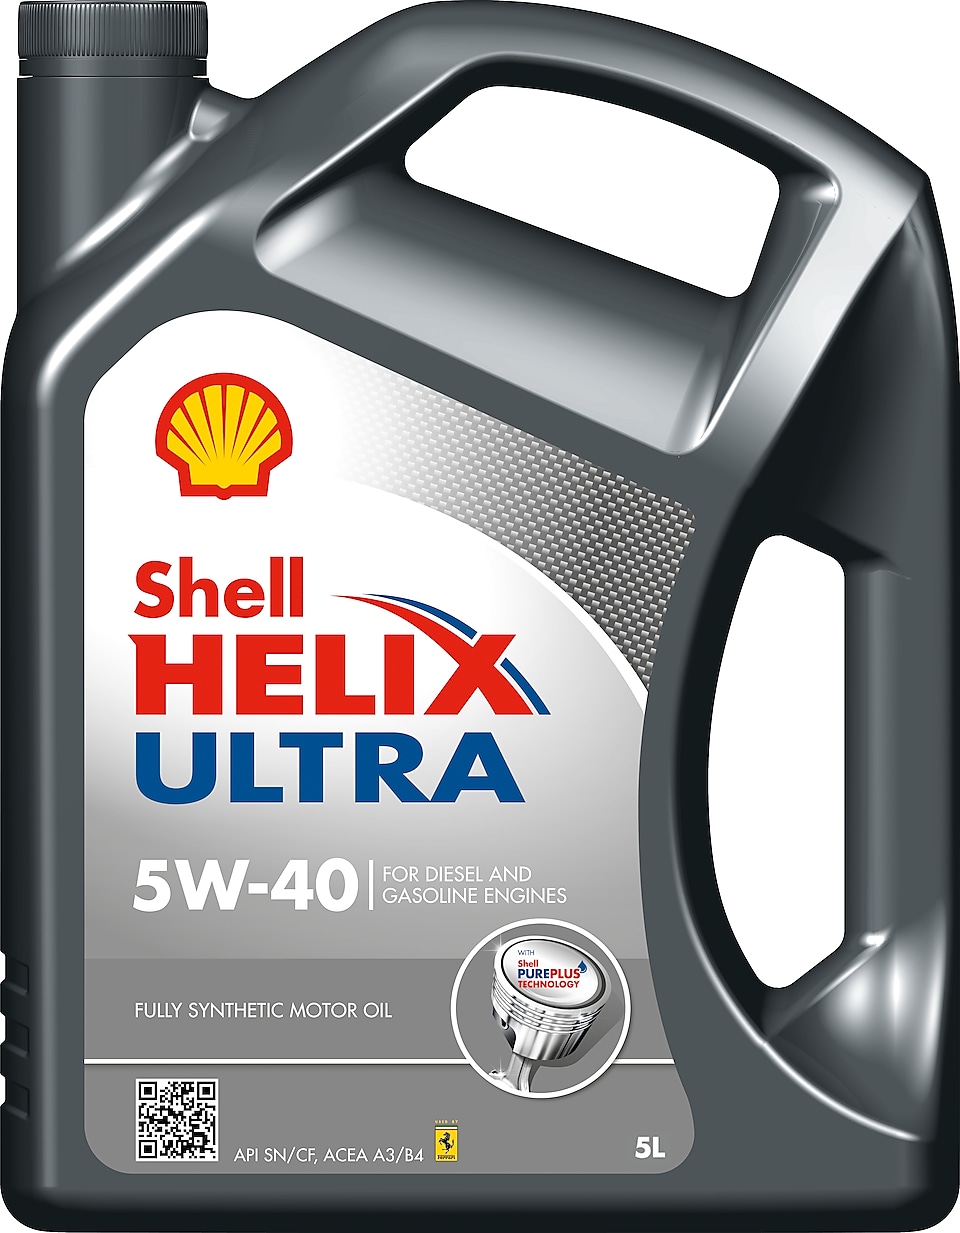 Packshot of Shell Helix Ultra 5W-40